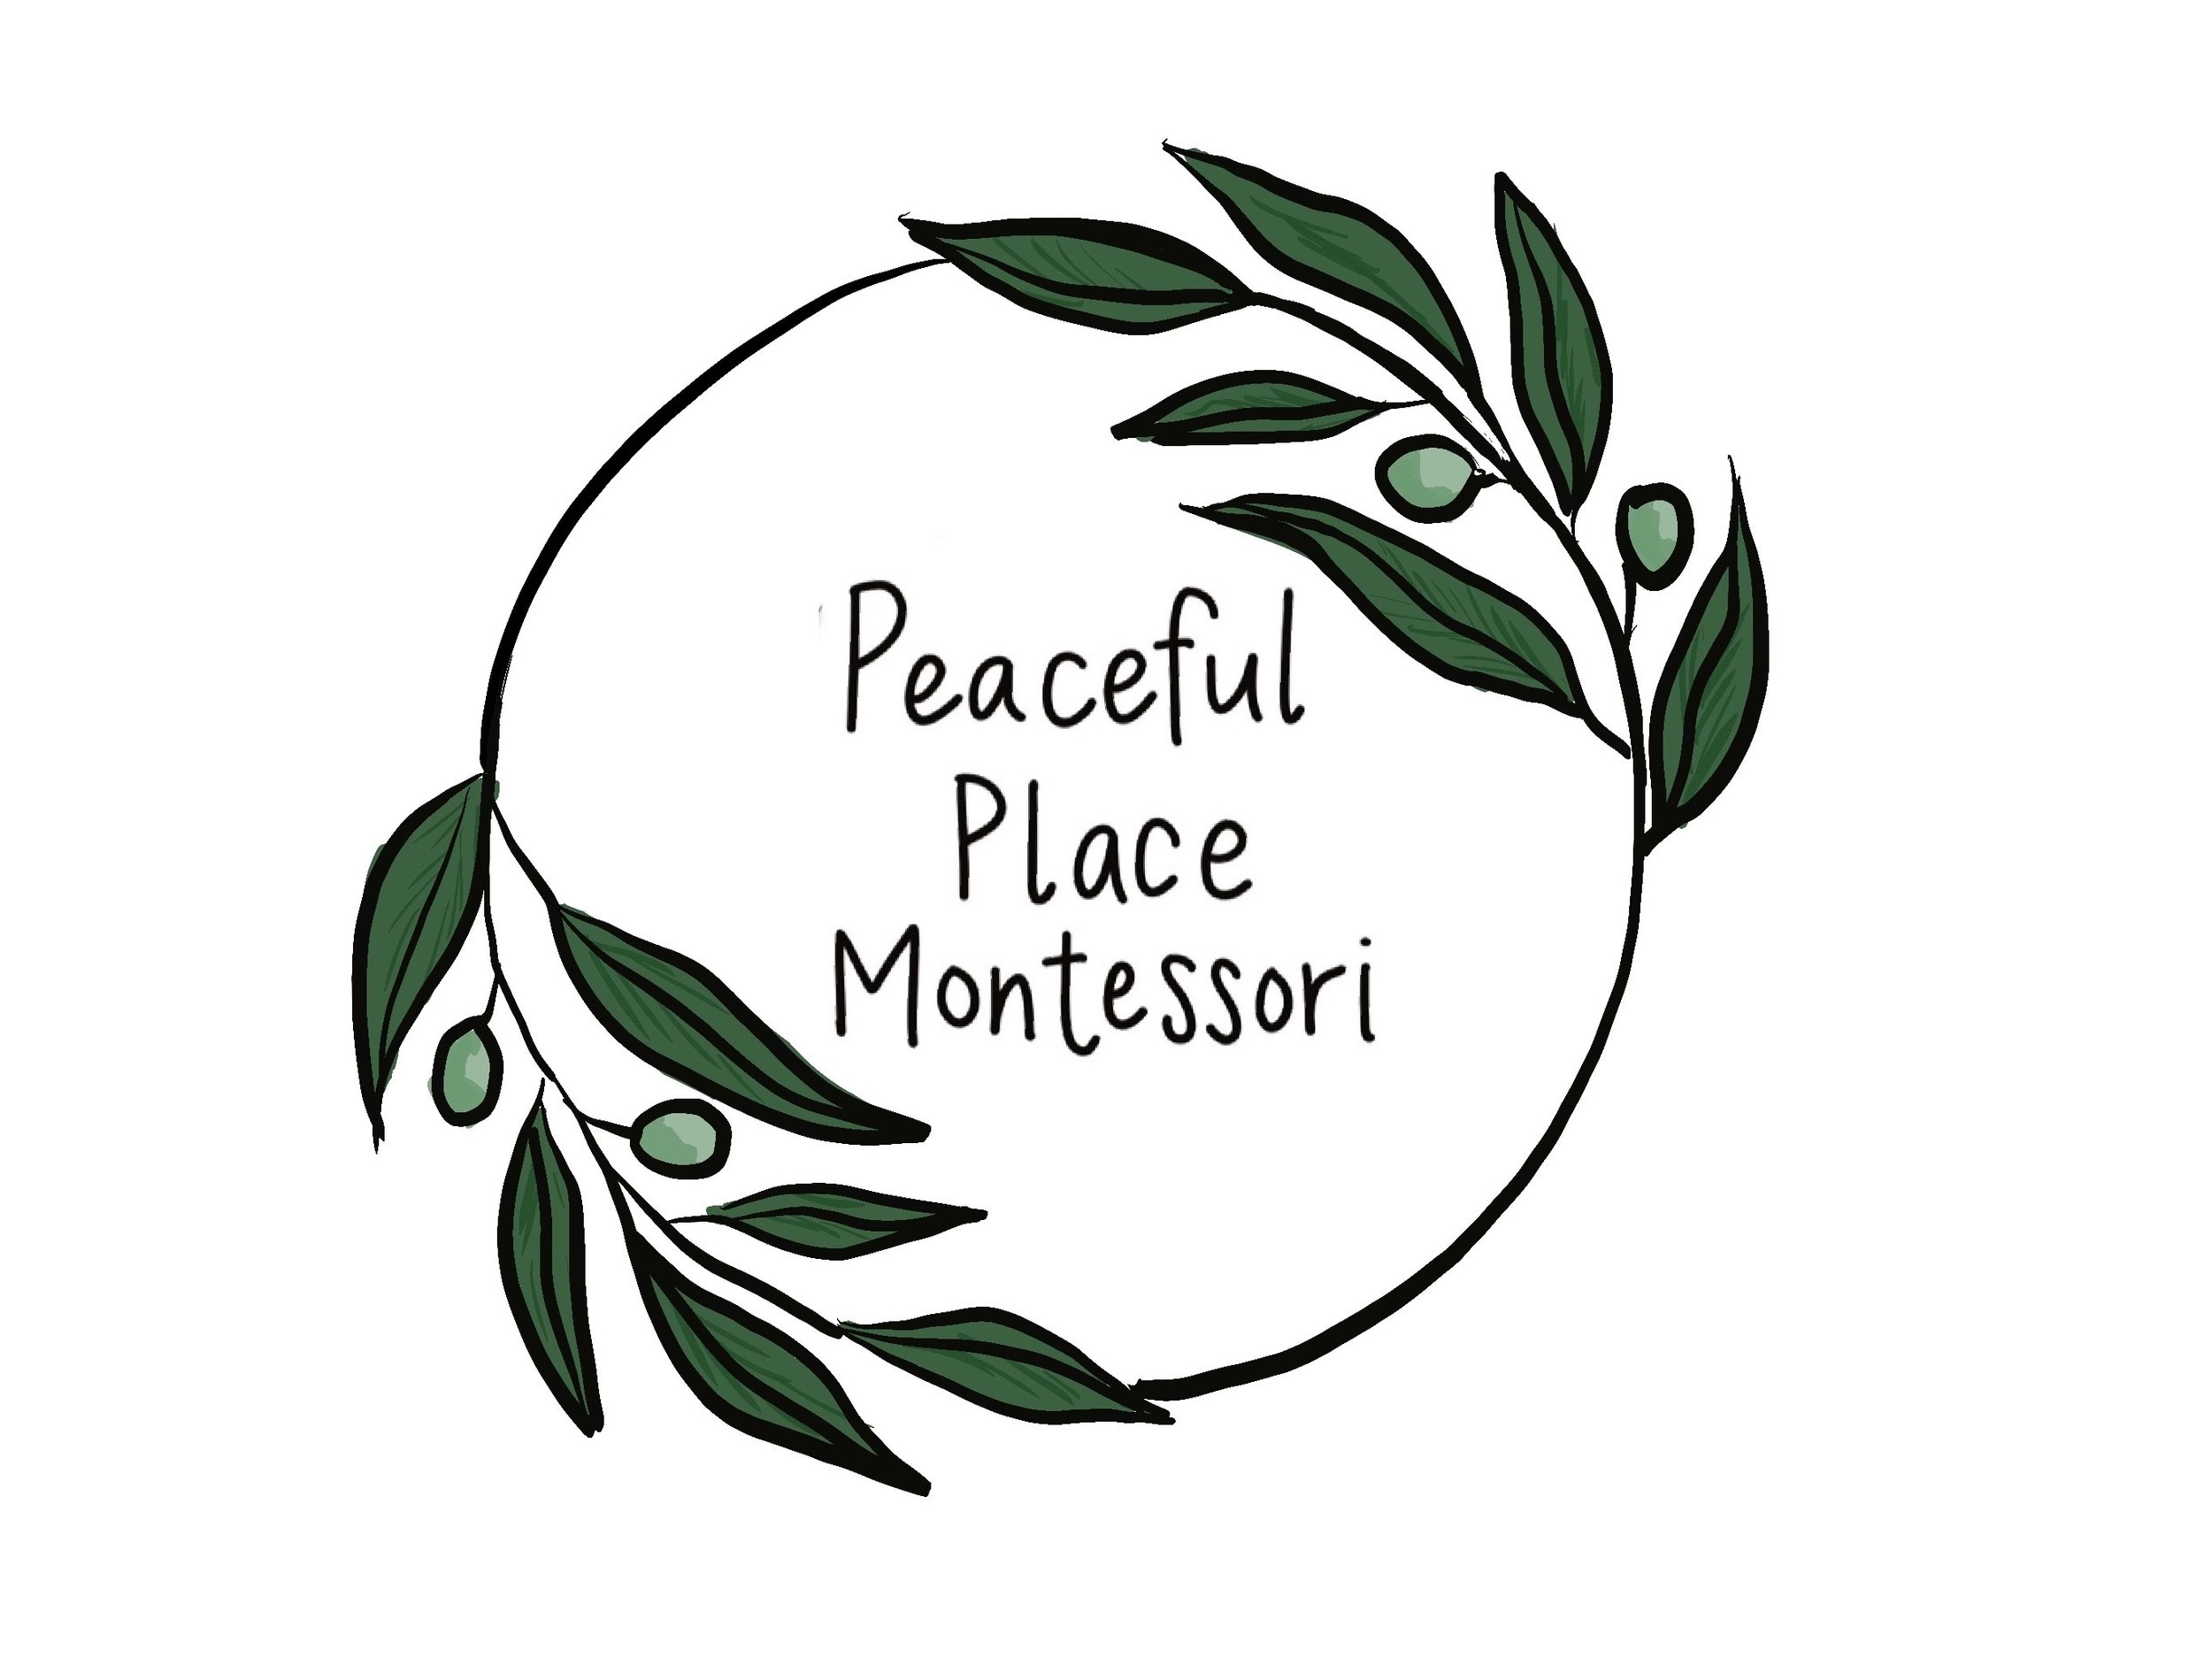 Peaceful Place Montessori